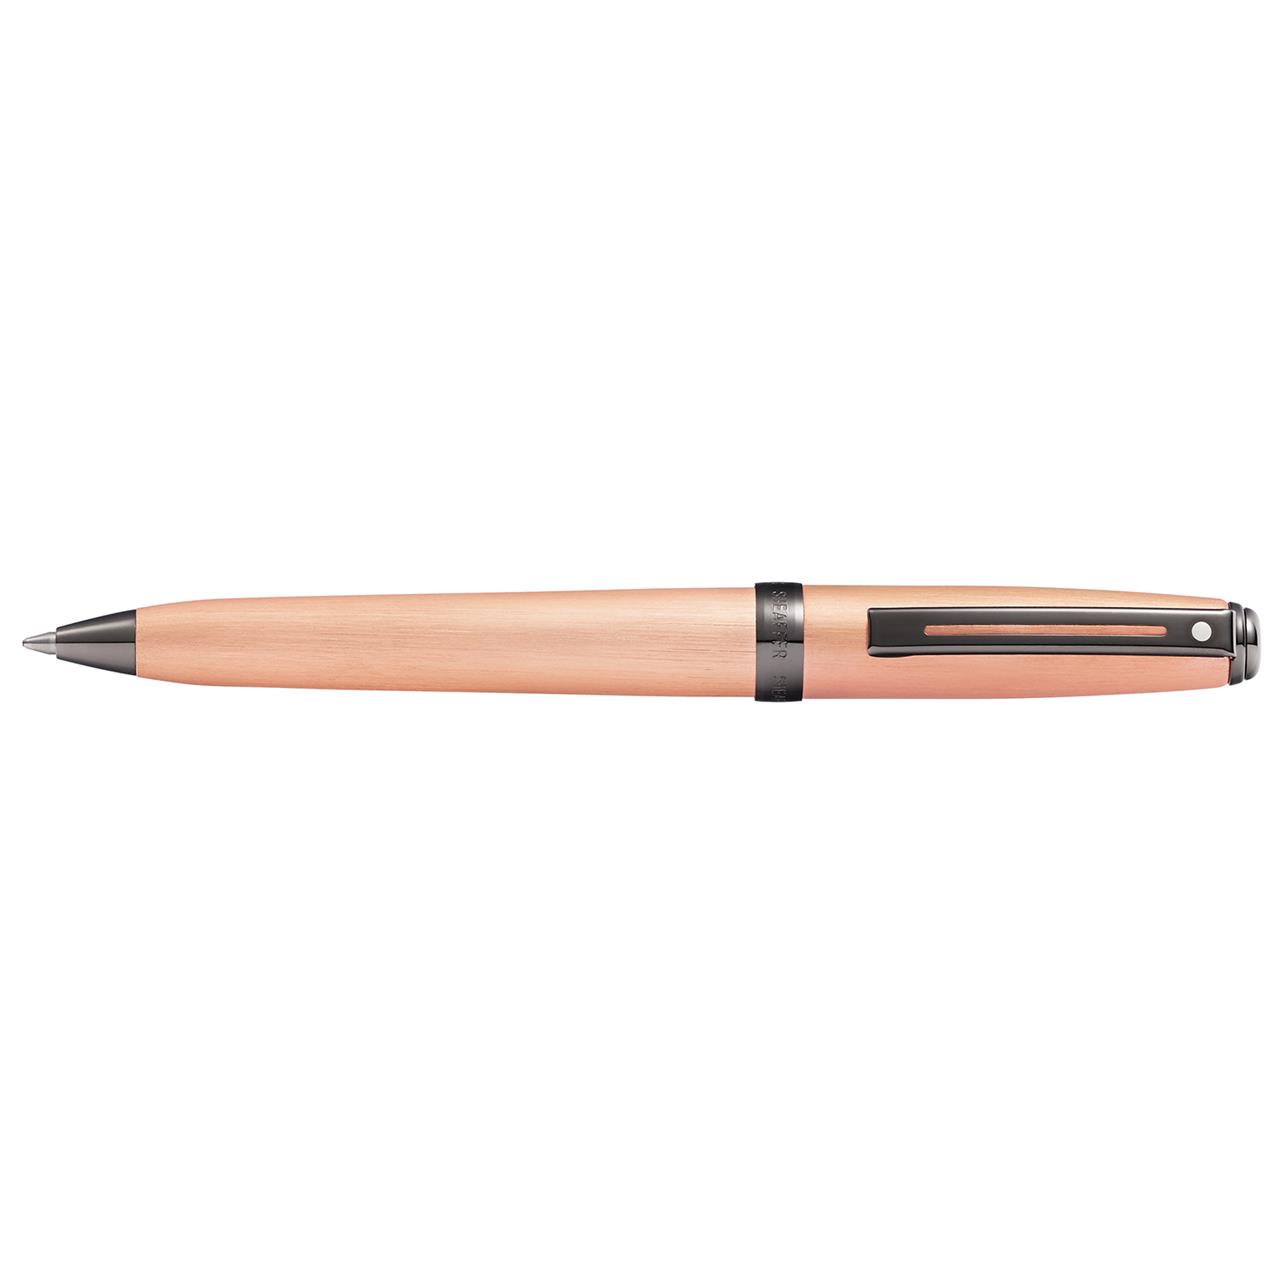 Sheaffer Pen - Brushed Copper